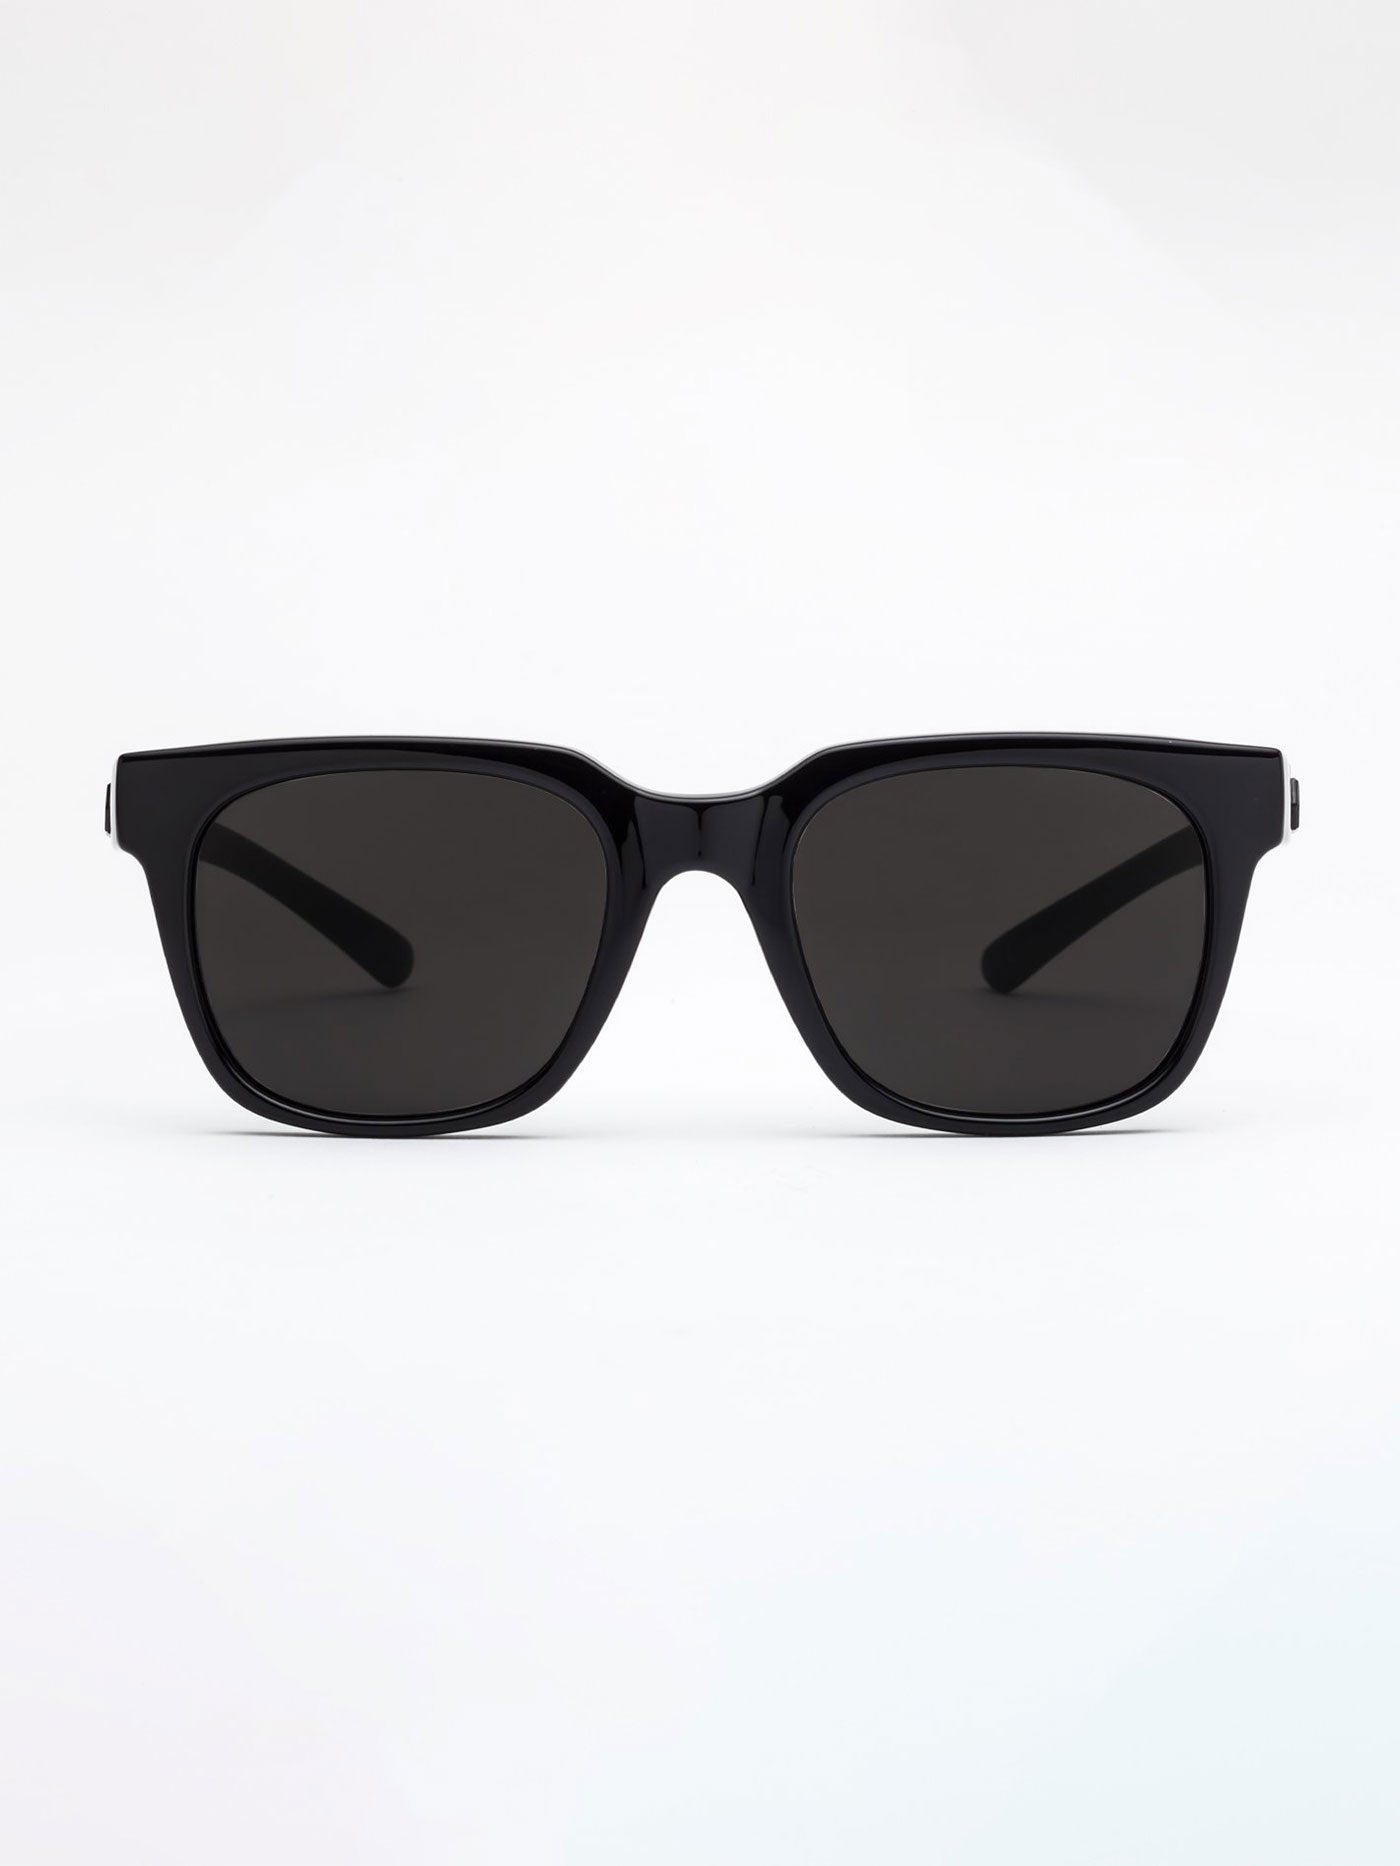 Volcom Morph Sunglasses